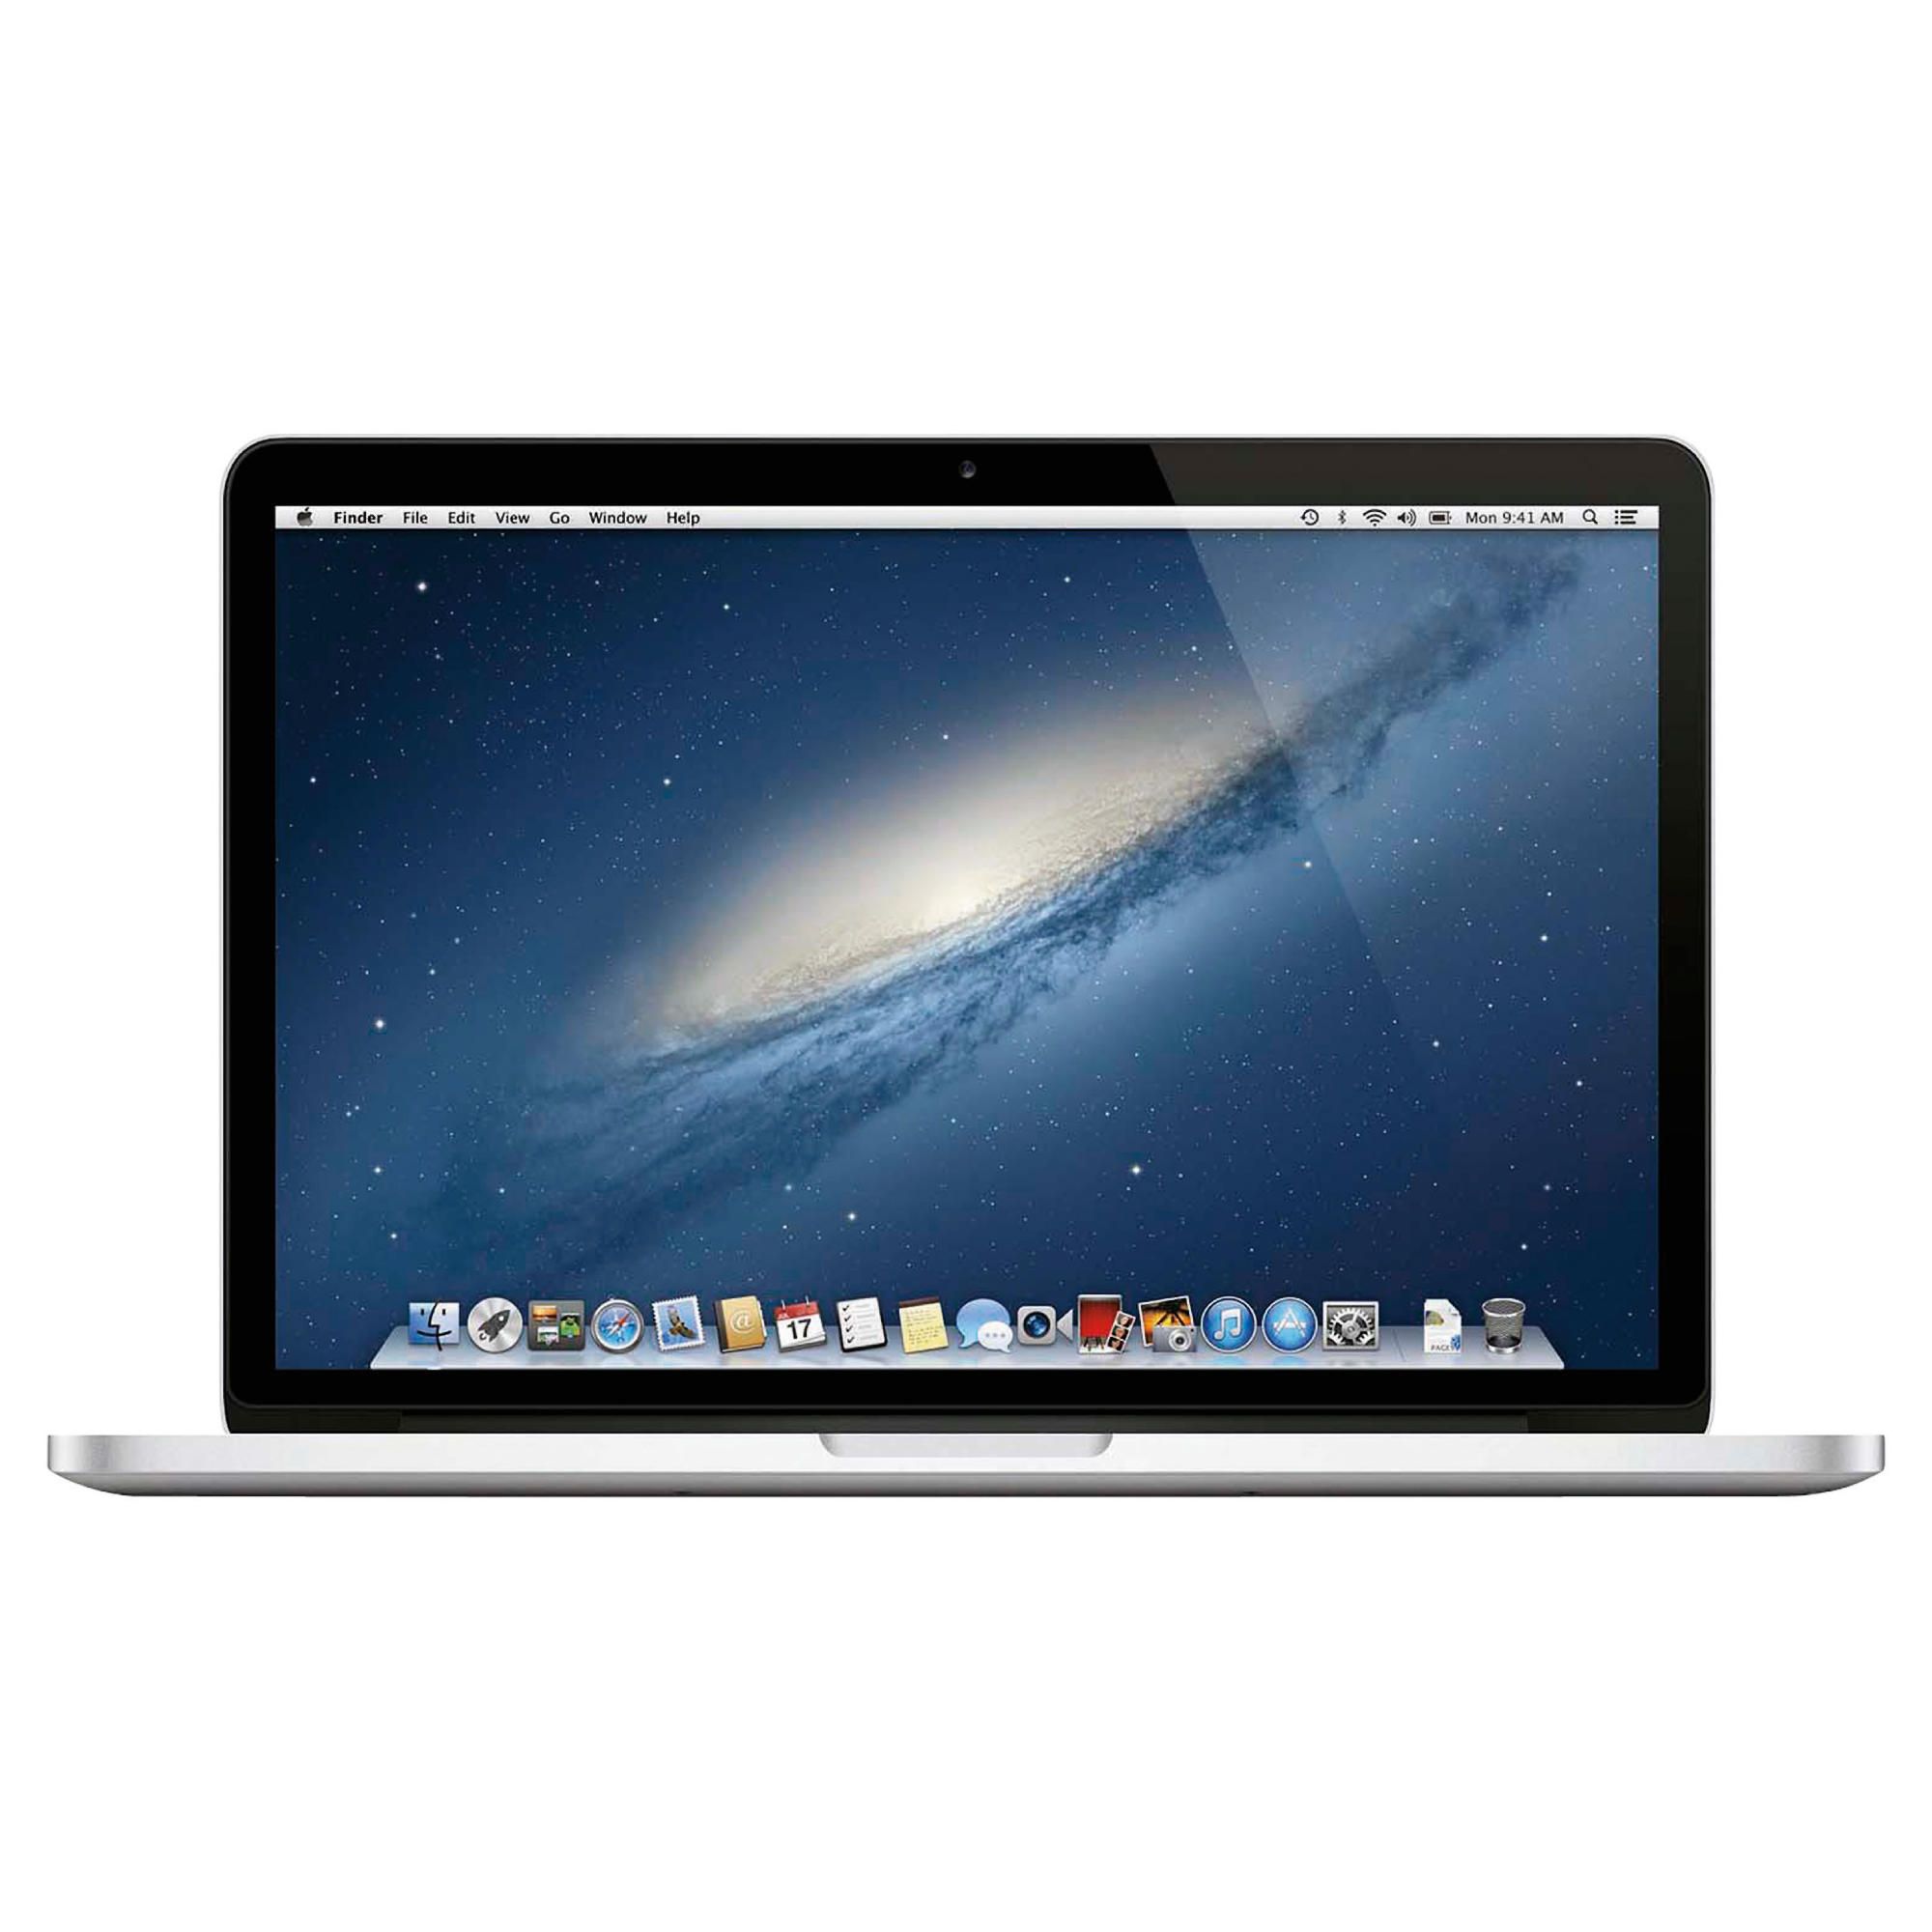 MacBook Pro 13.3” with Retina display ME865B/A 2.4GHZ 8GB 256GB Flash Drive